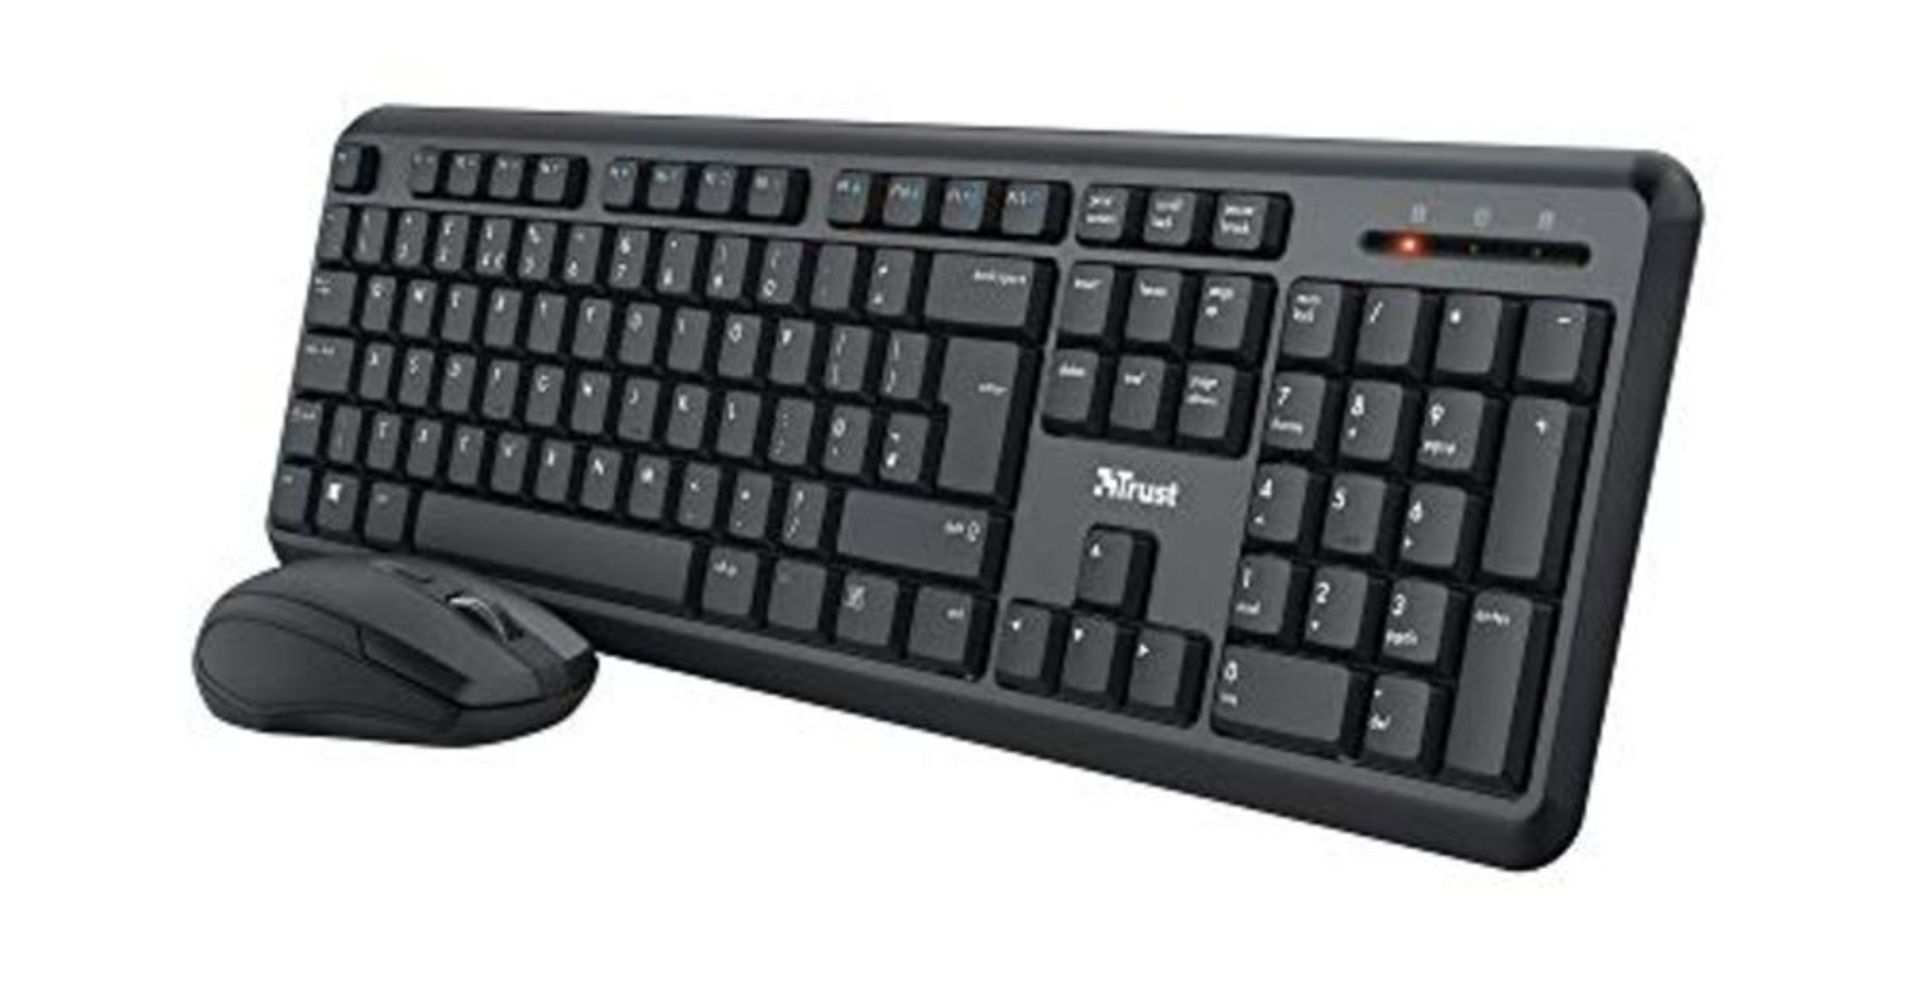 Trust Ymo Wireless Keyboard and Mouse Set -Qwerty UK Layout, Silent Keys, Full-Size Ke